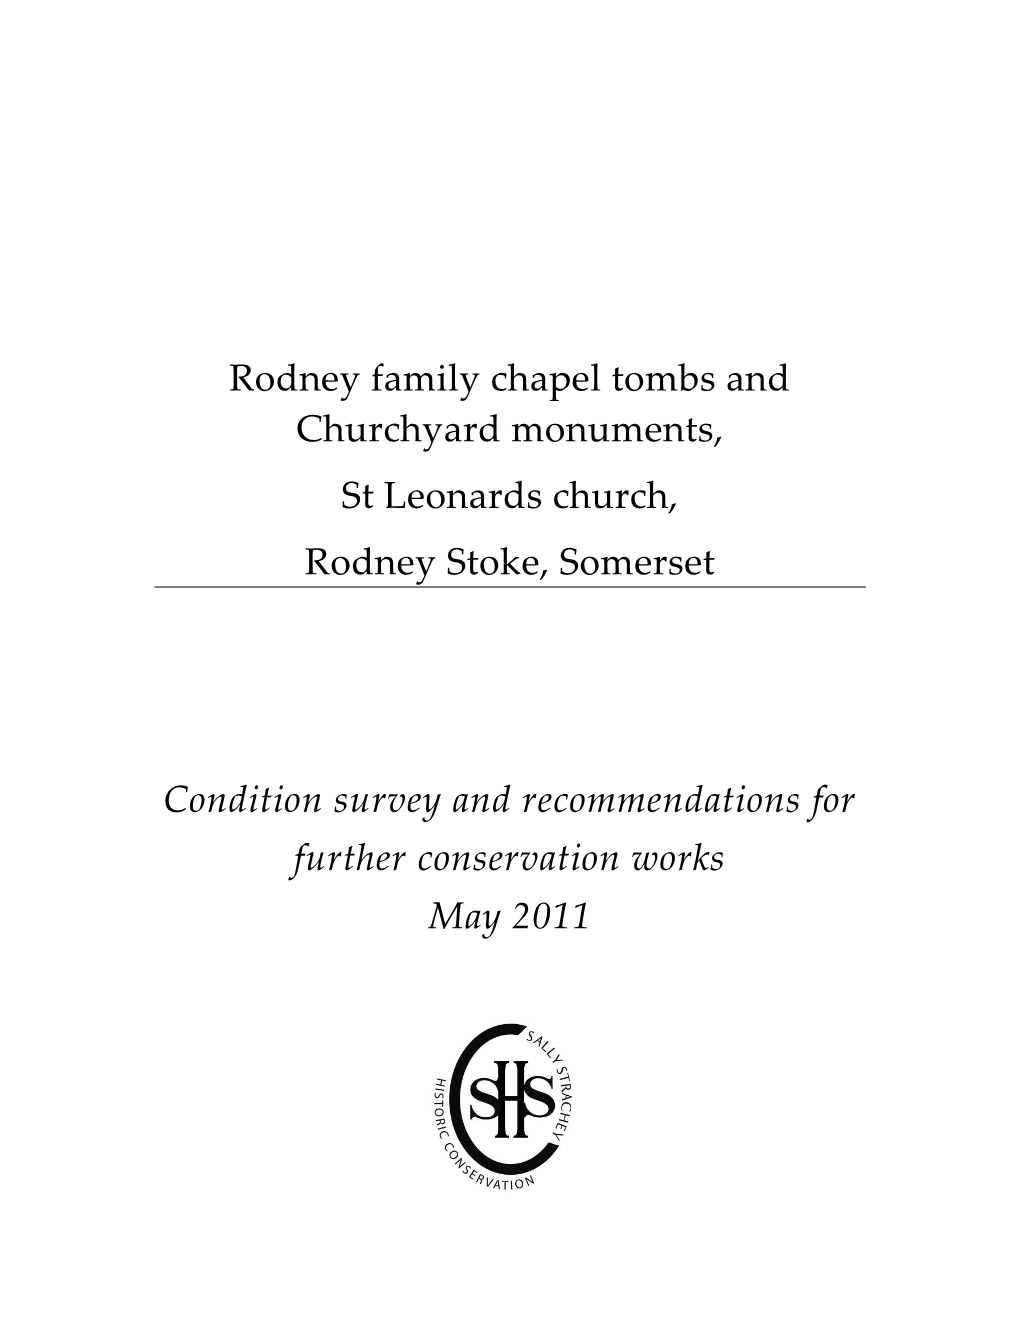 Rodney Family Chapel Tombs and Churchyard Monuments, St Leonards Church, Rodney Stoke, Somerset